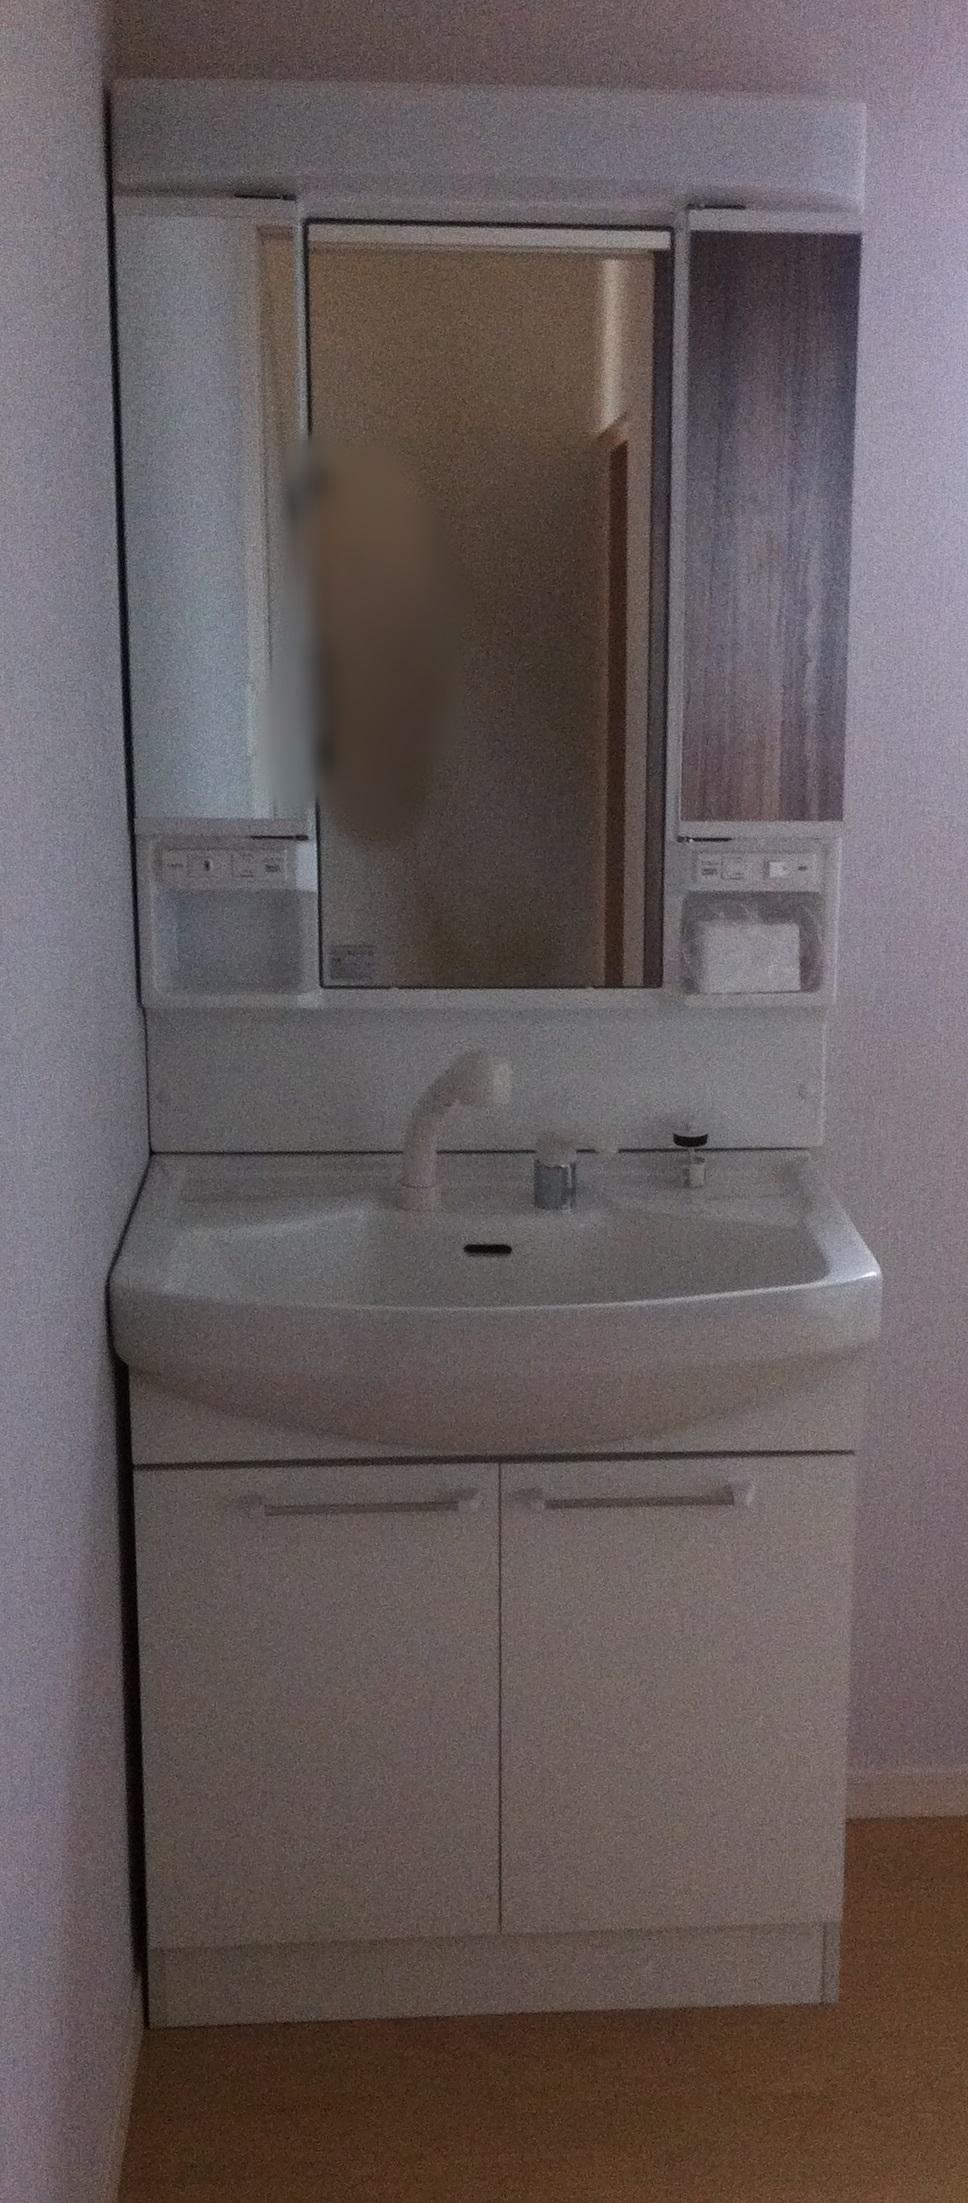 Wash basin, toilet. Washbasin highly functional